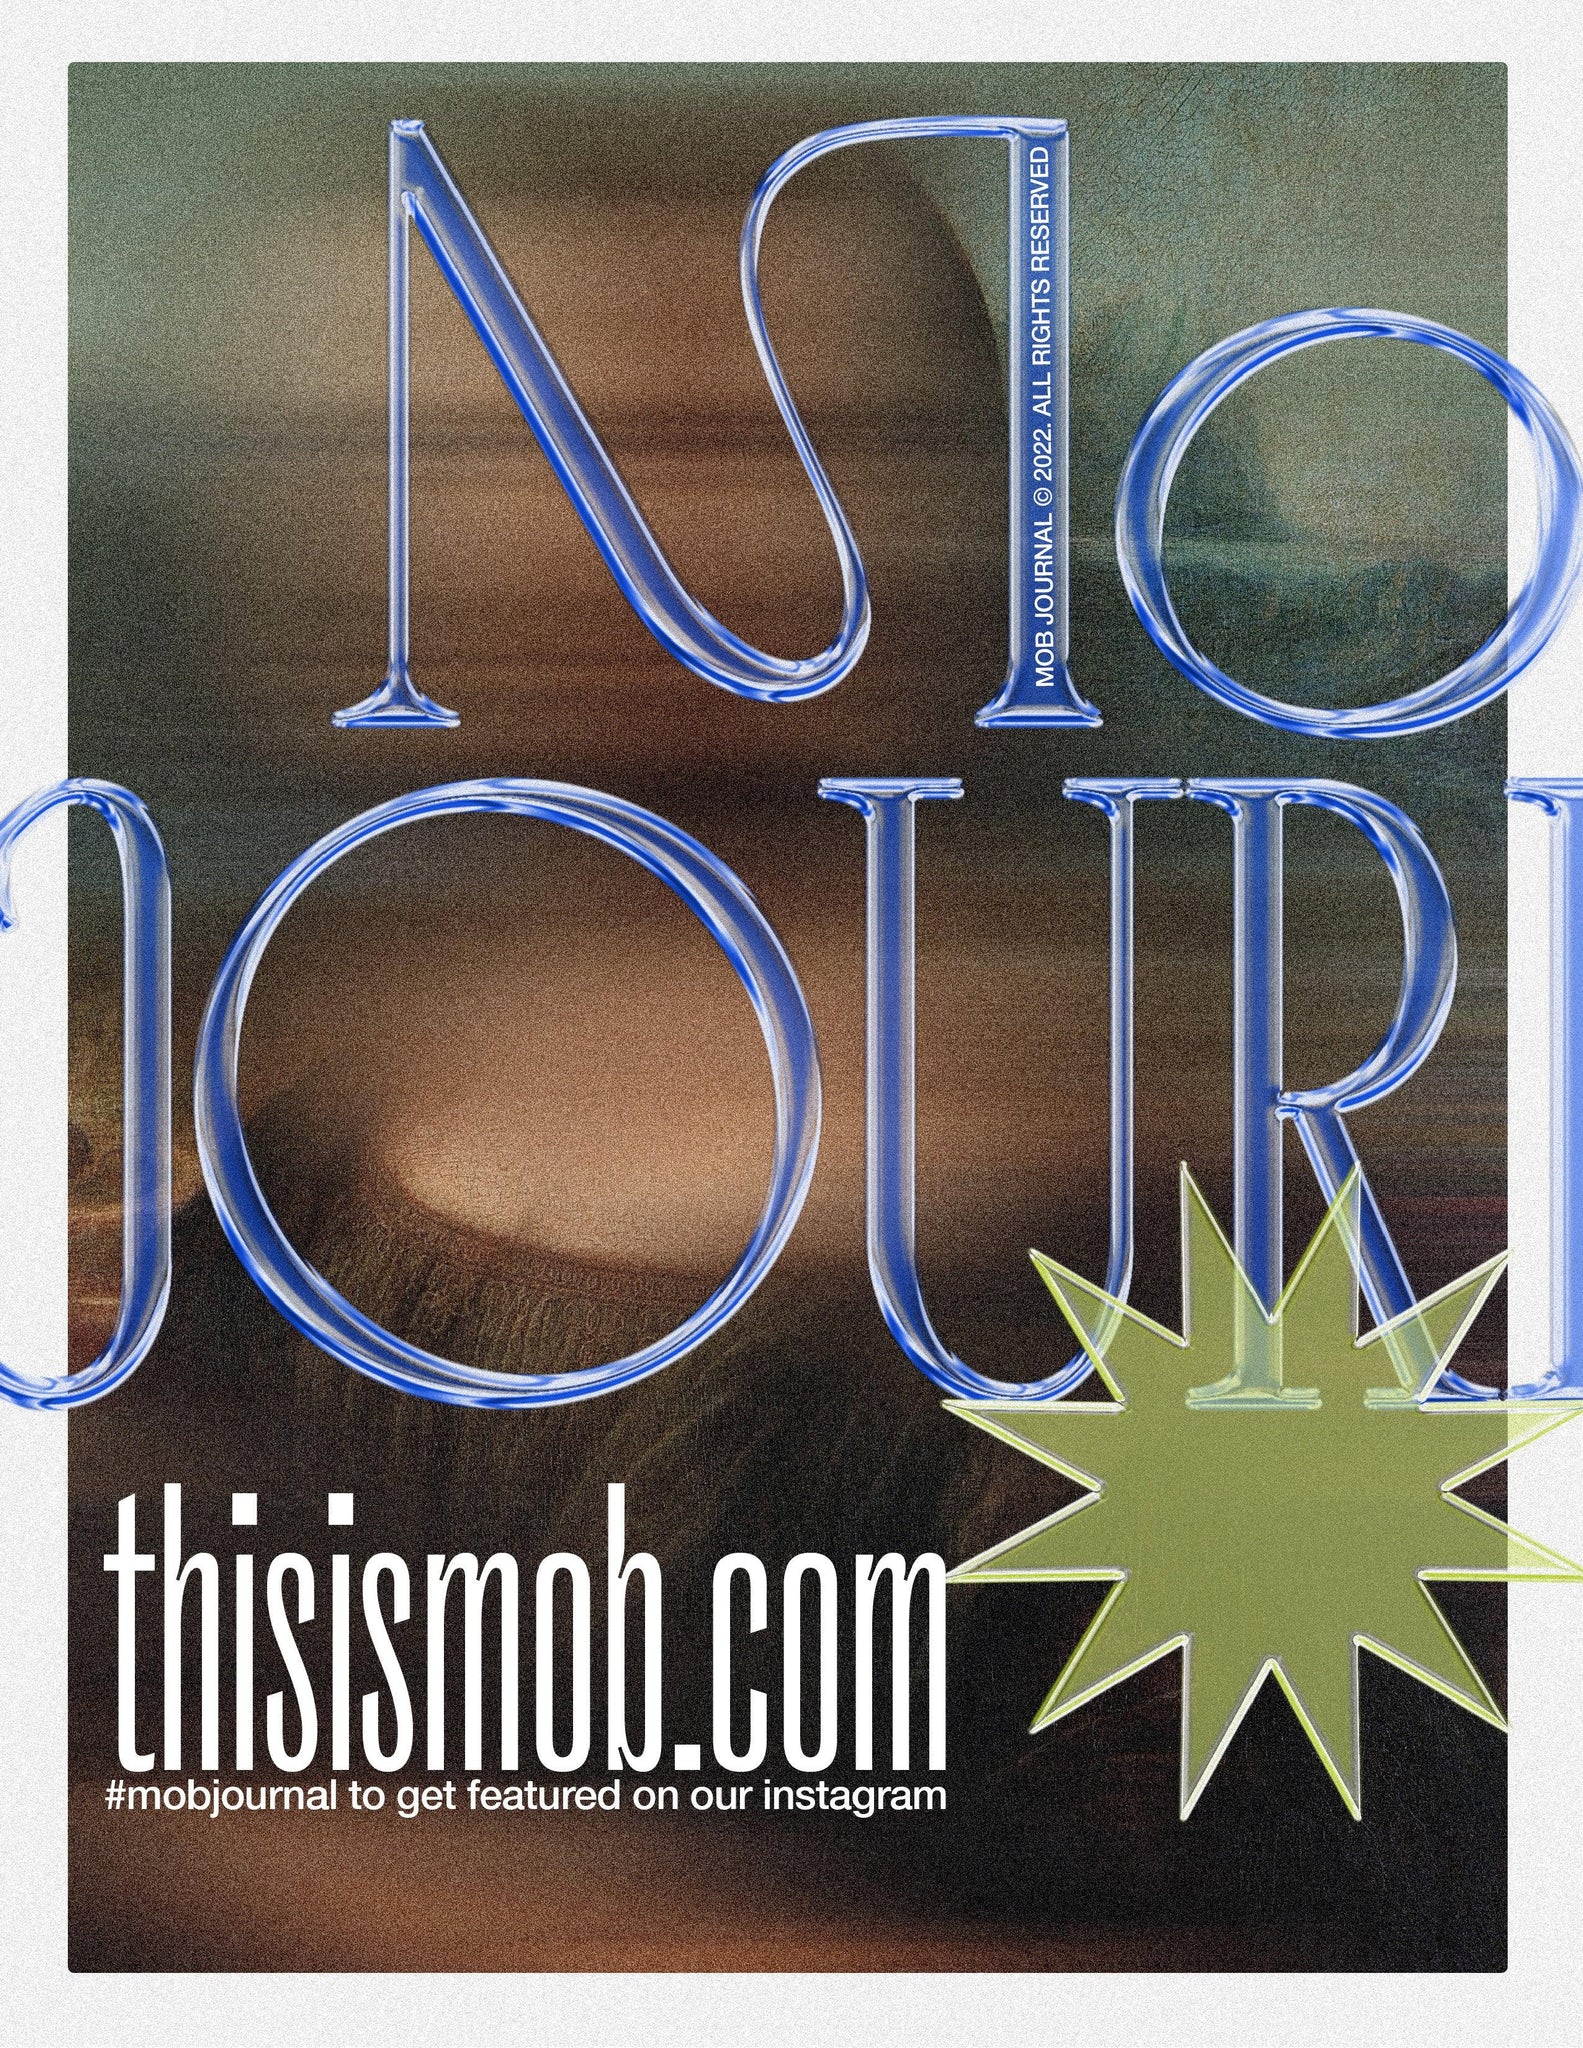 MOB JOURNAL | VOLUME TWENTY FIVE | ISSUE #24 - Mob Journal